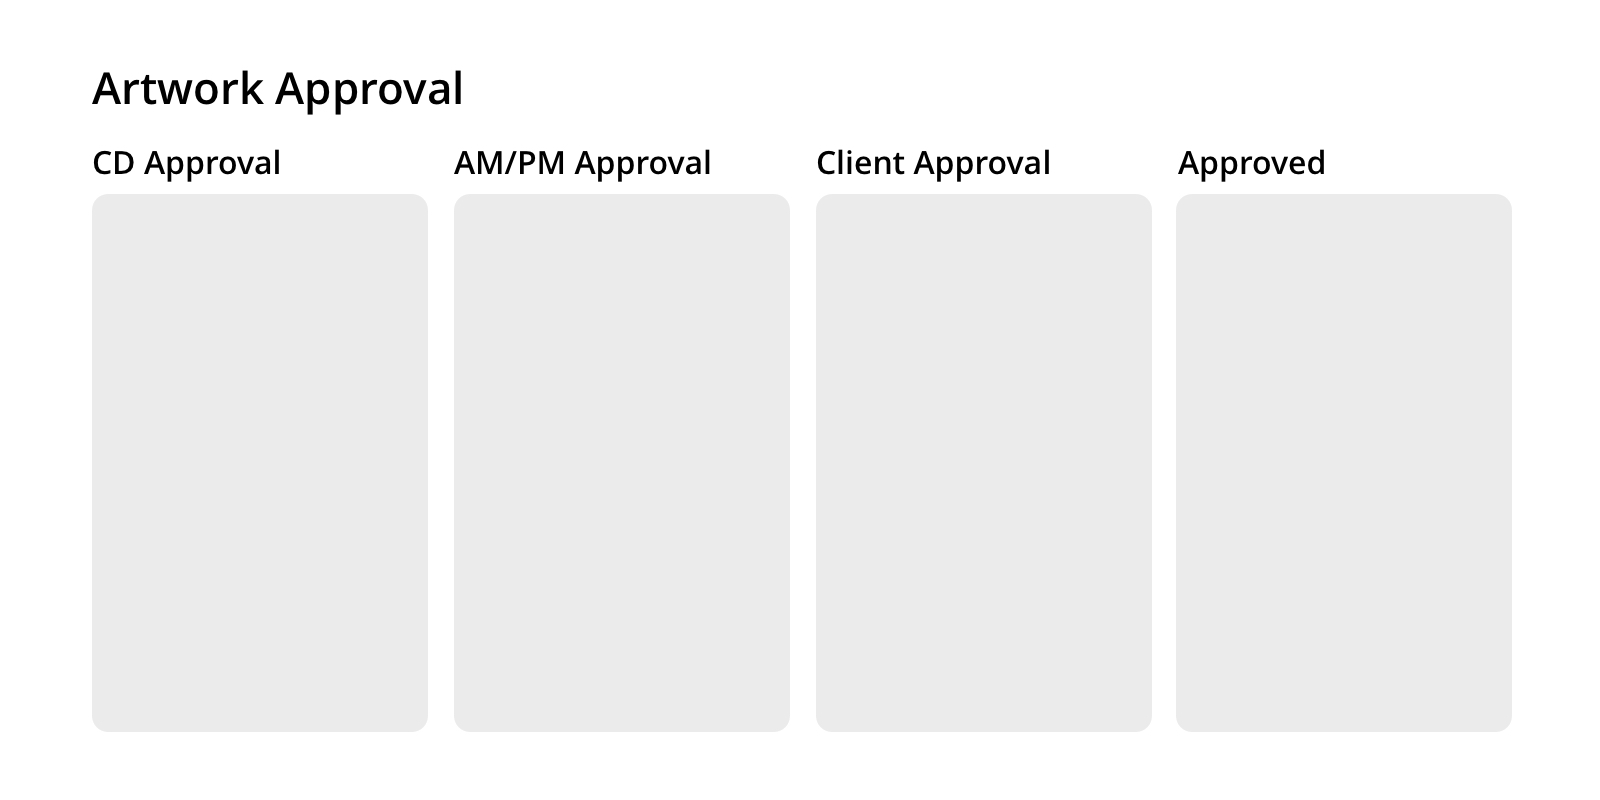 Artwork Approval Workflow Image